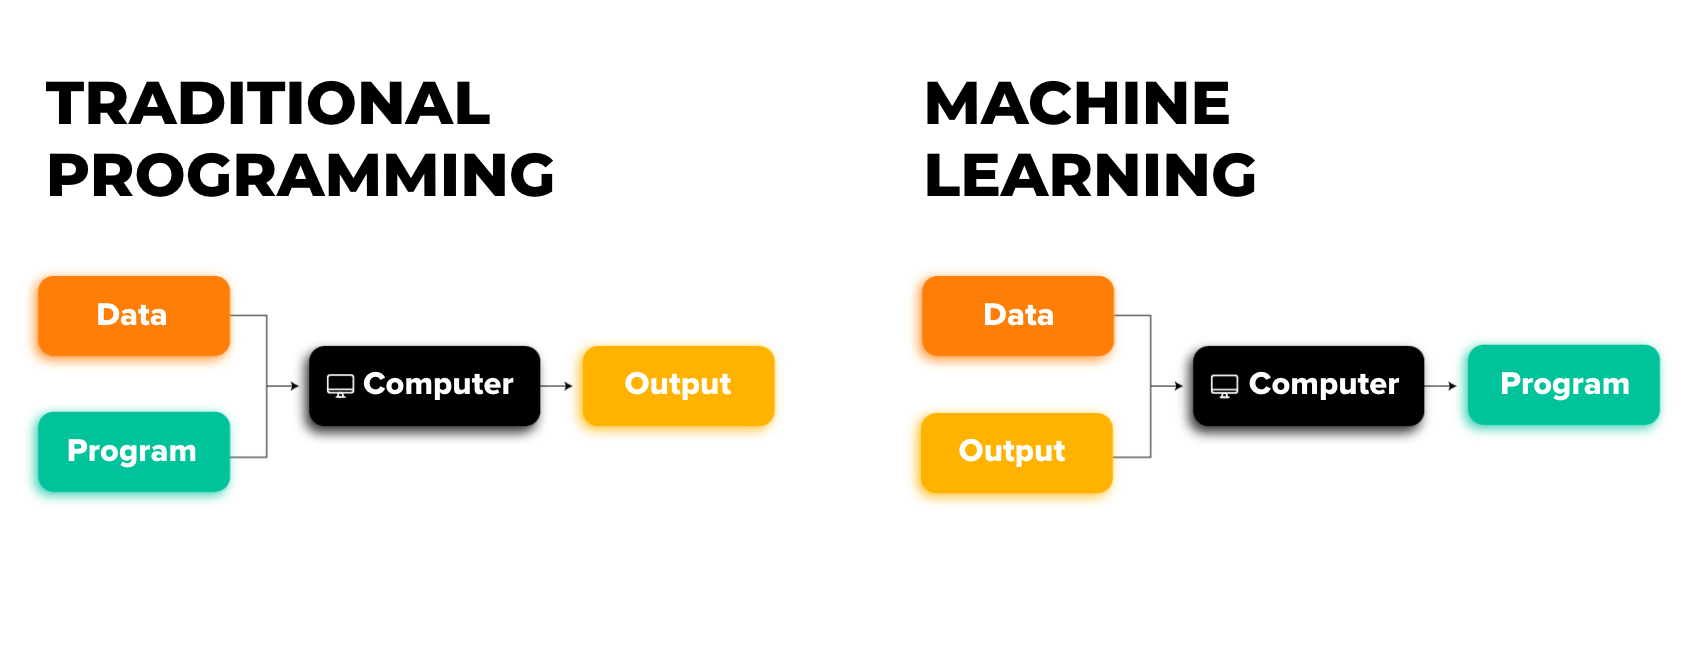 Machine Learning vs Traditional programming scheme